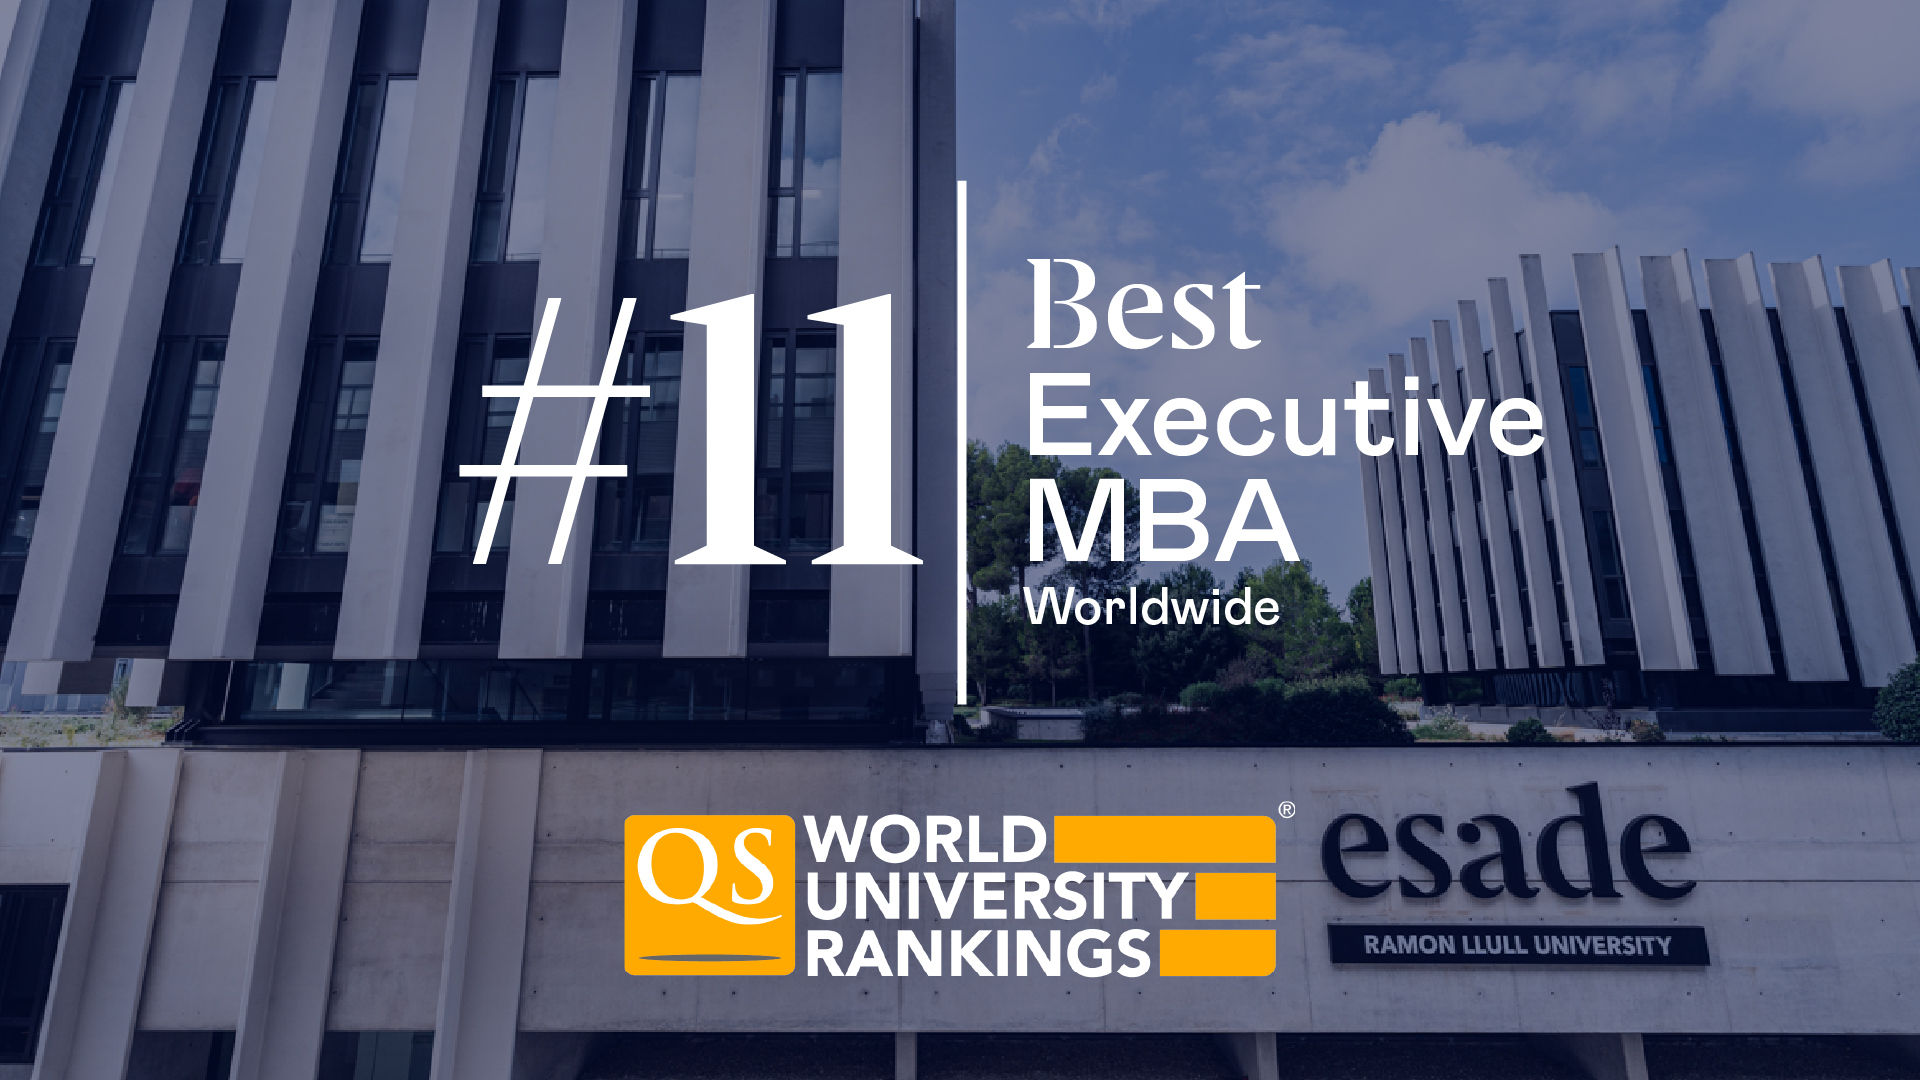 Esade Executive MBA in world’s top 15 according to QS Esade